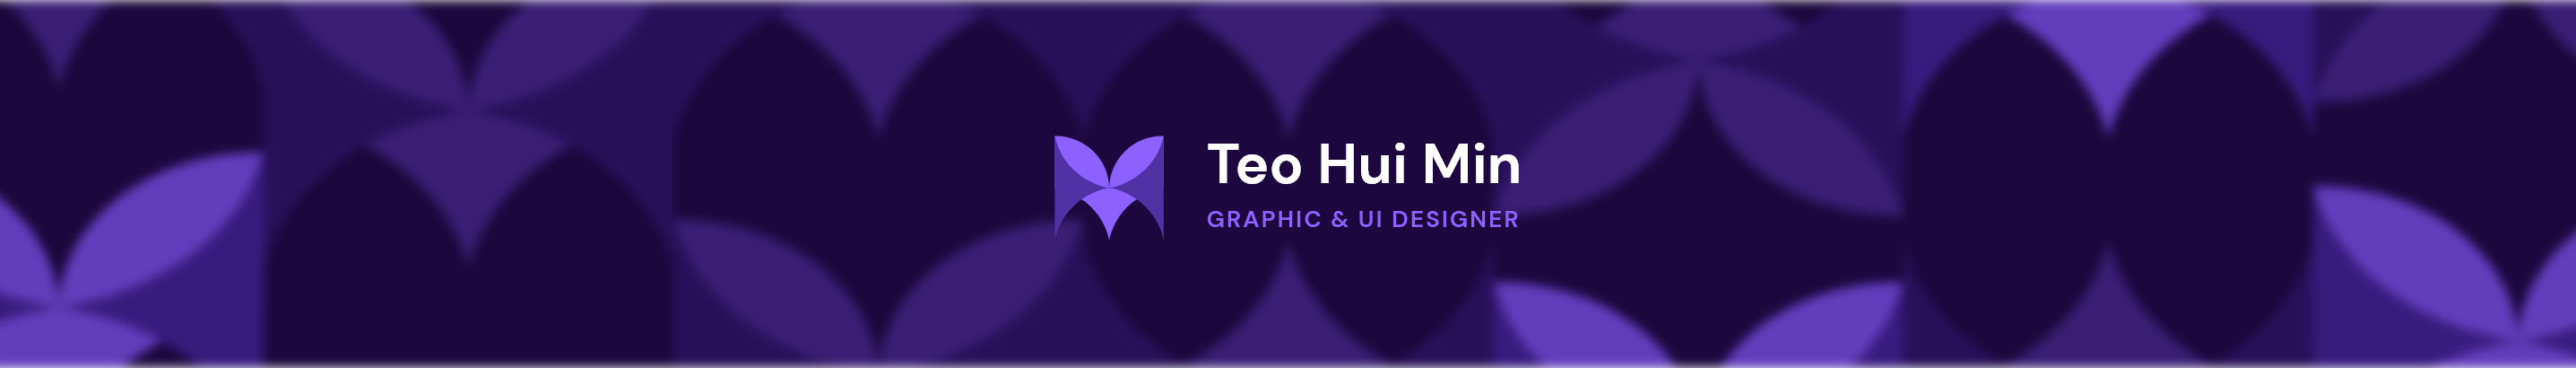 Teo Hui Min profil başlığı